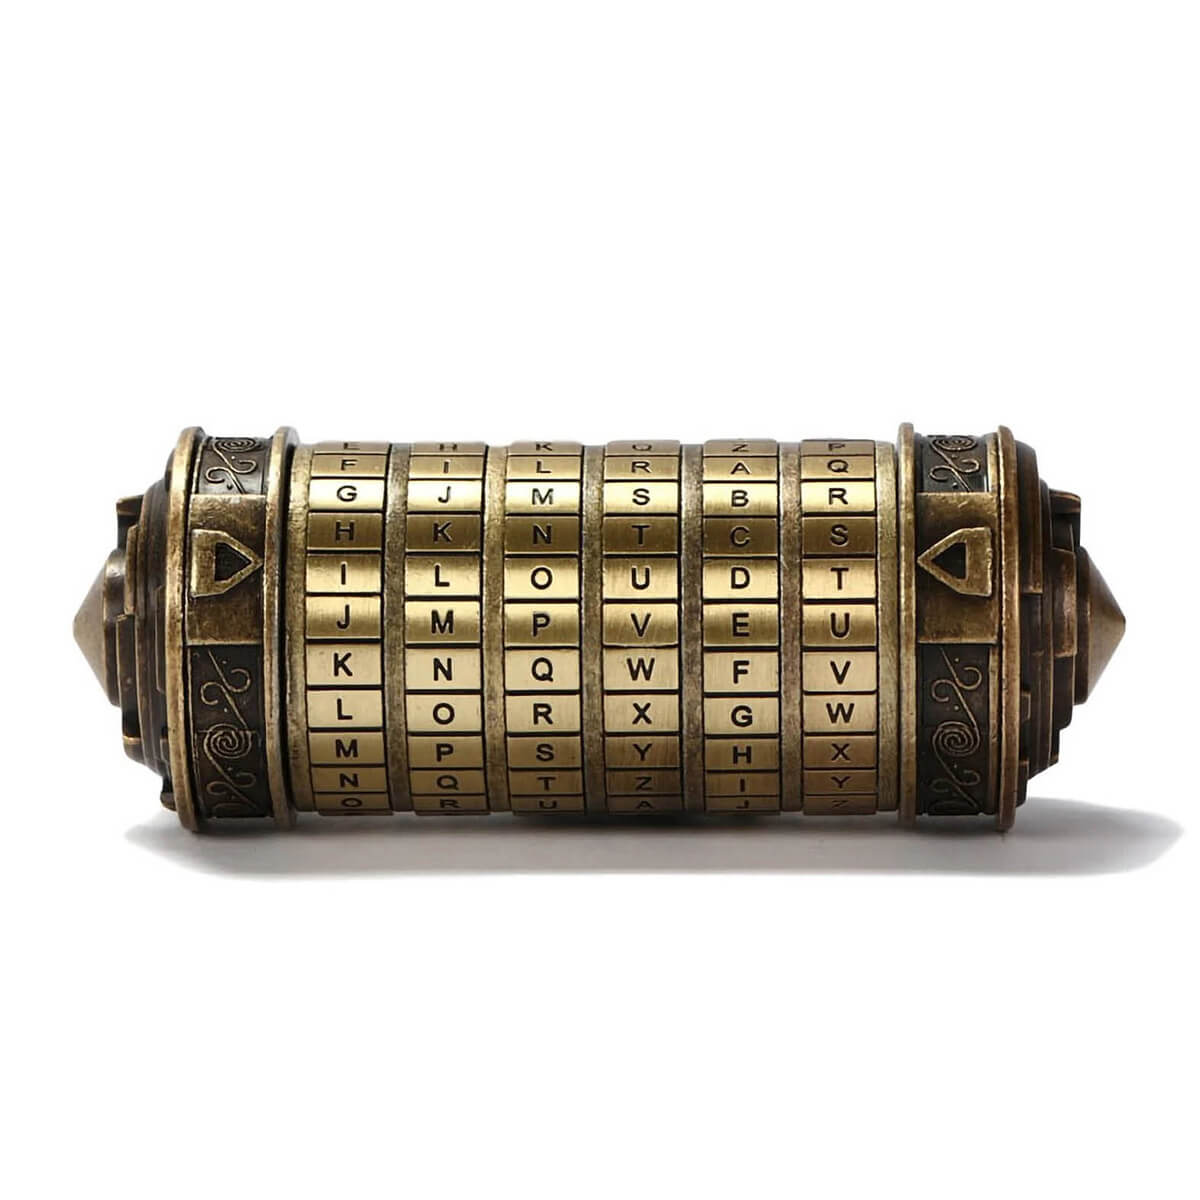 Enigmatic Da Vinci Cryptex Lock with intricate metal detailing